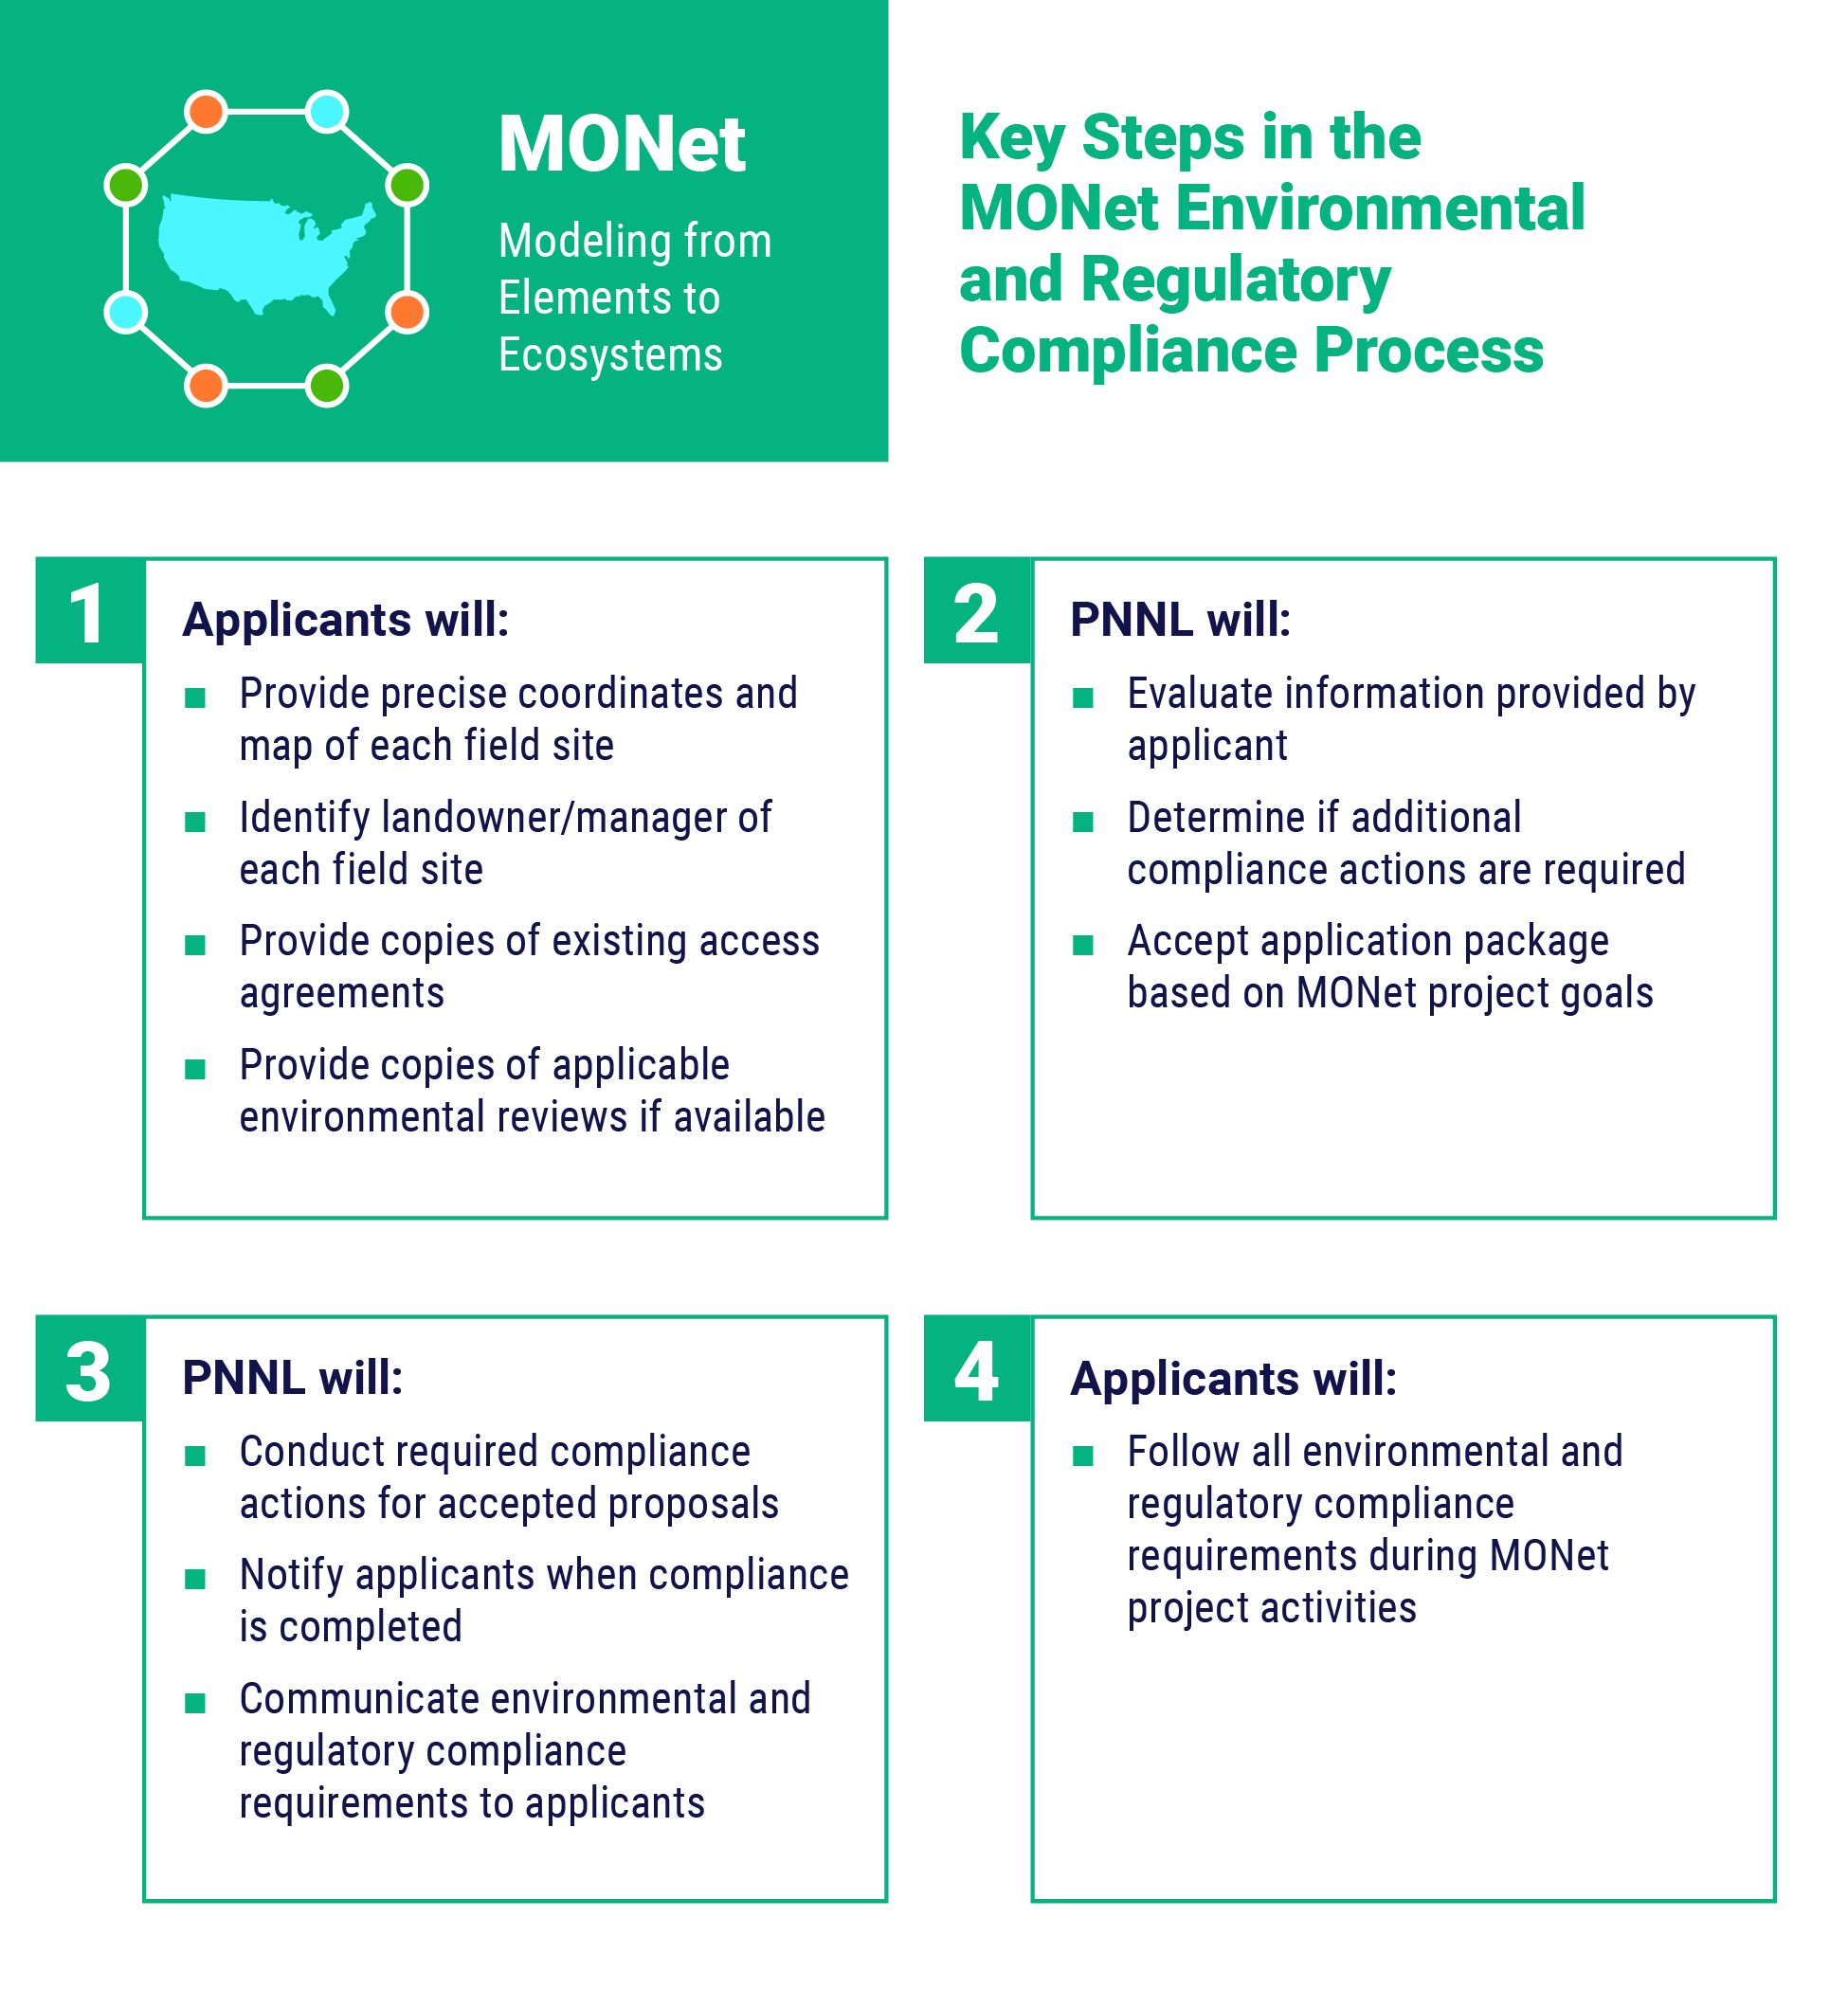 MONet Environmental Regulatory Workflow: Key steps in the MONet Environmental and Regulatory Compliance process